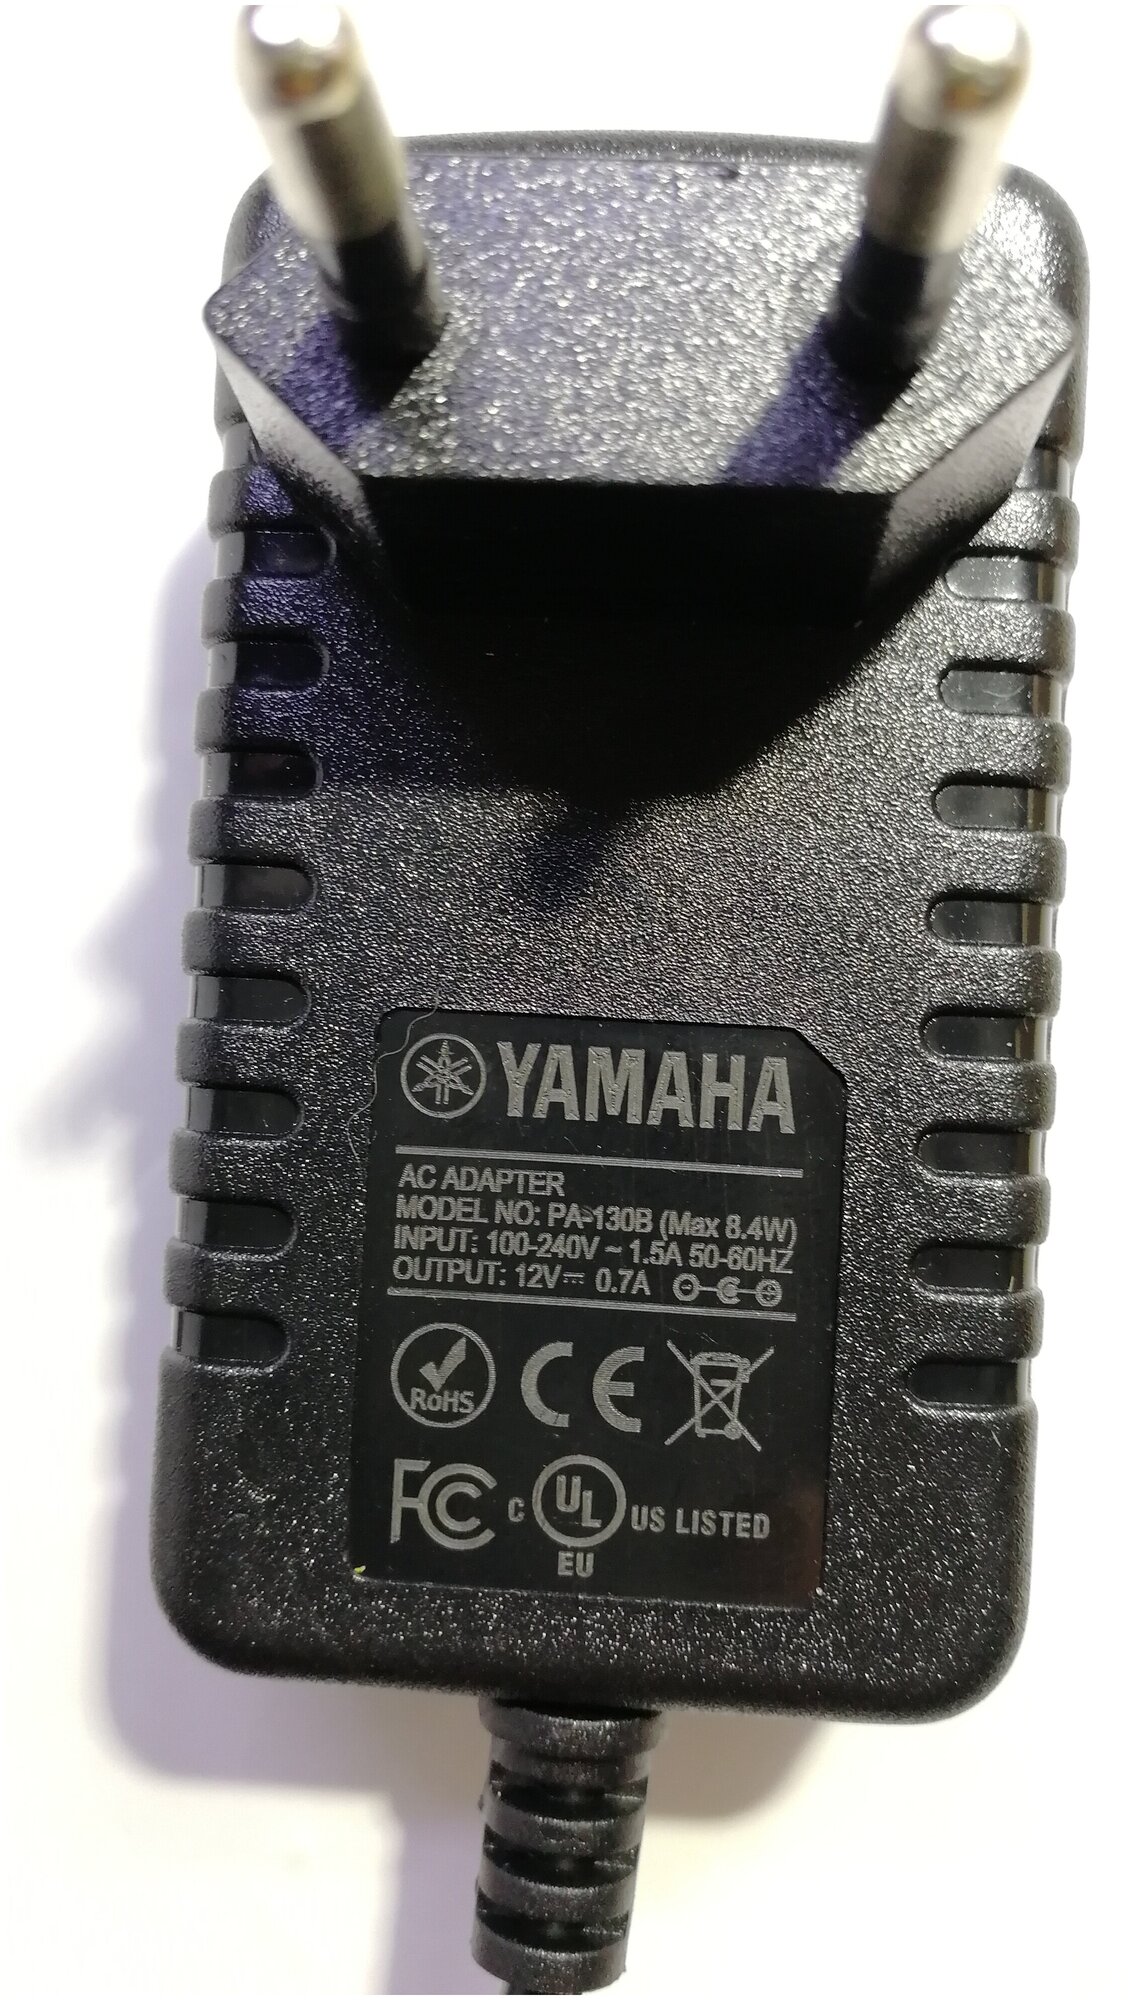 Адаптер блок питания PA-130B для синтезаторов Yamaha 12v 07a разъём 55 x 25 mm